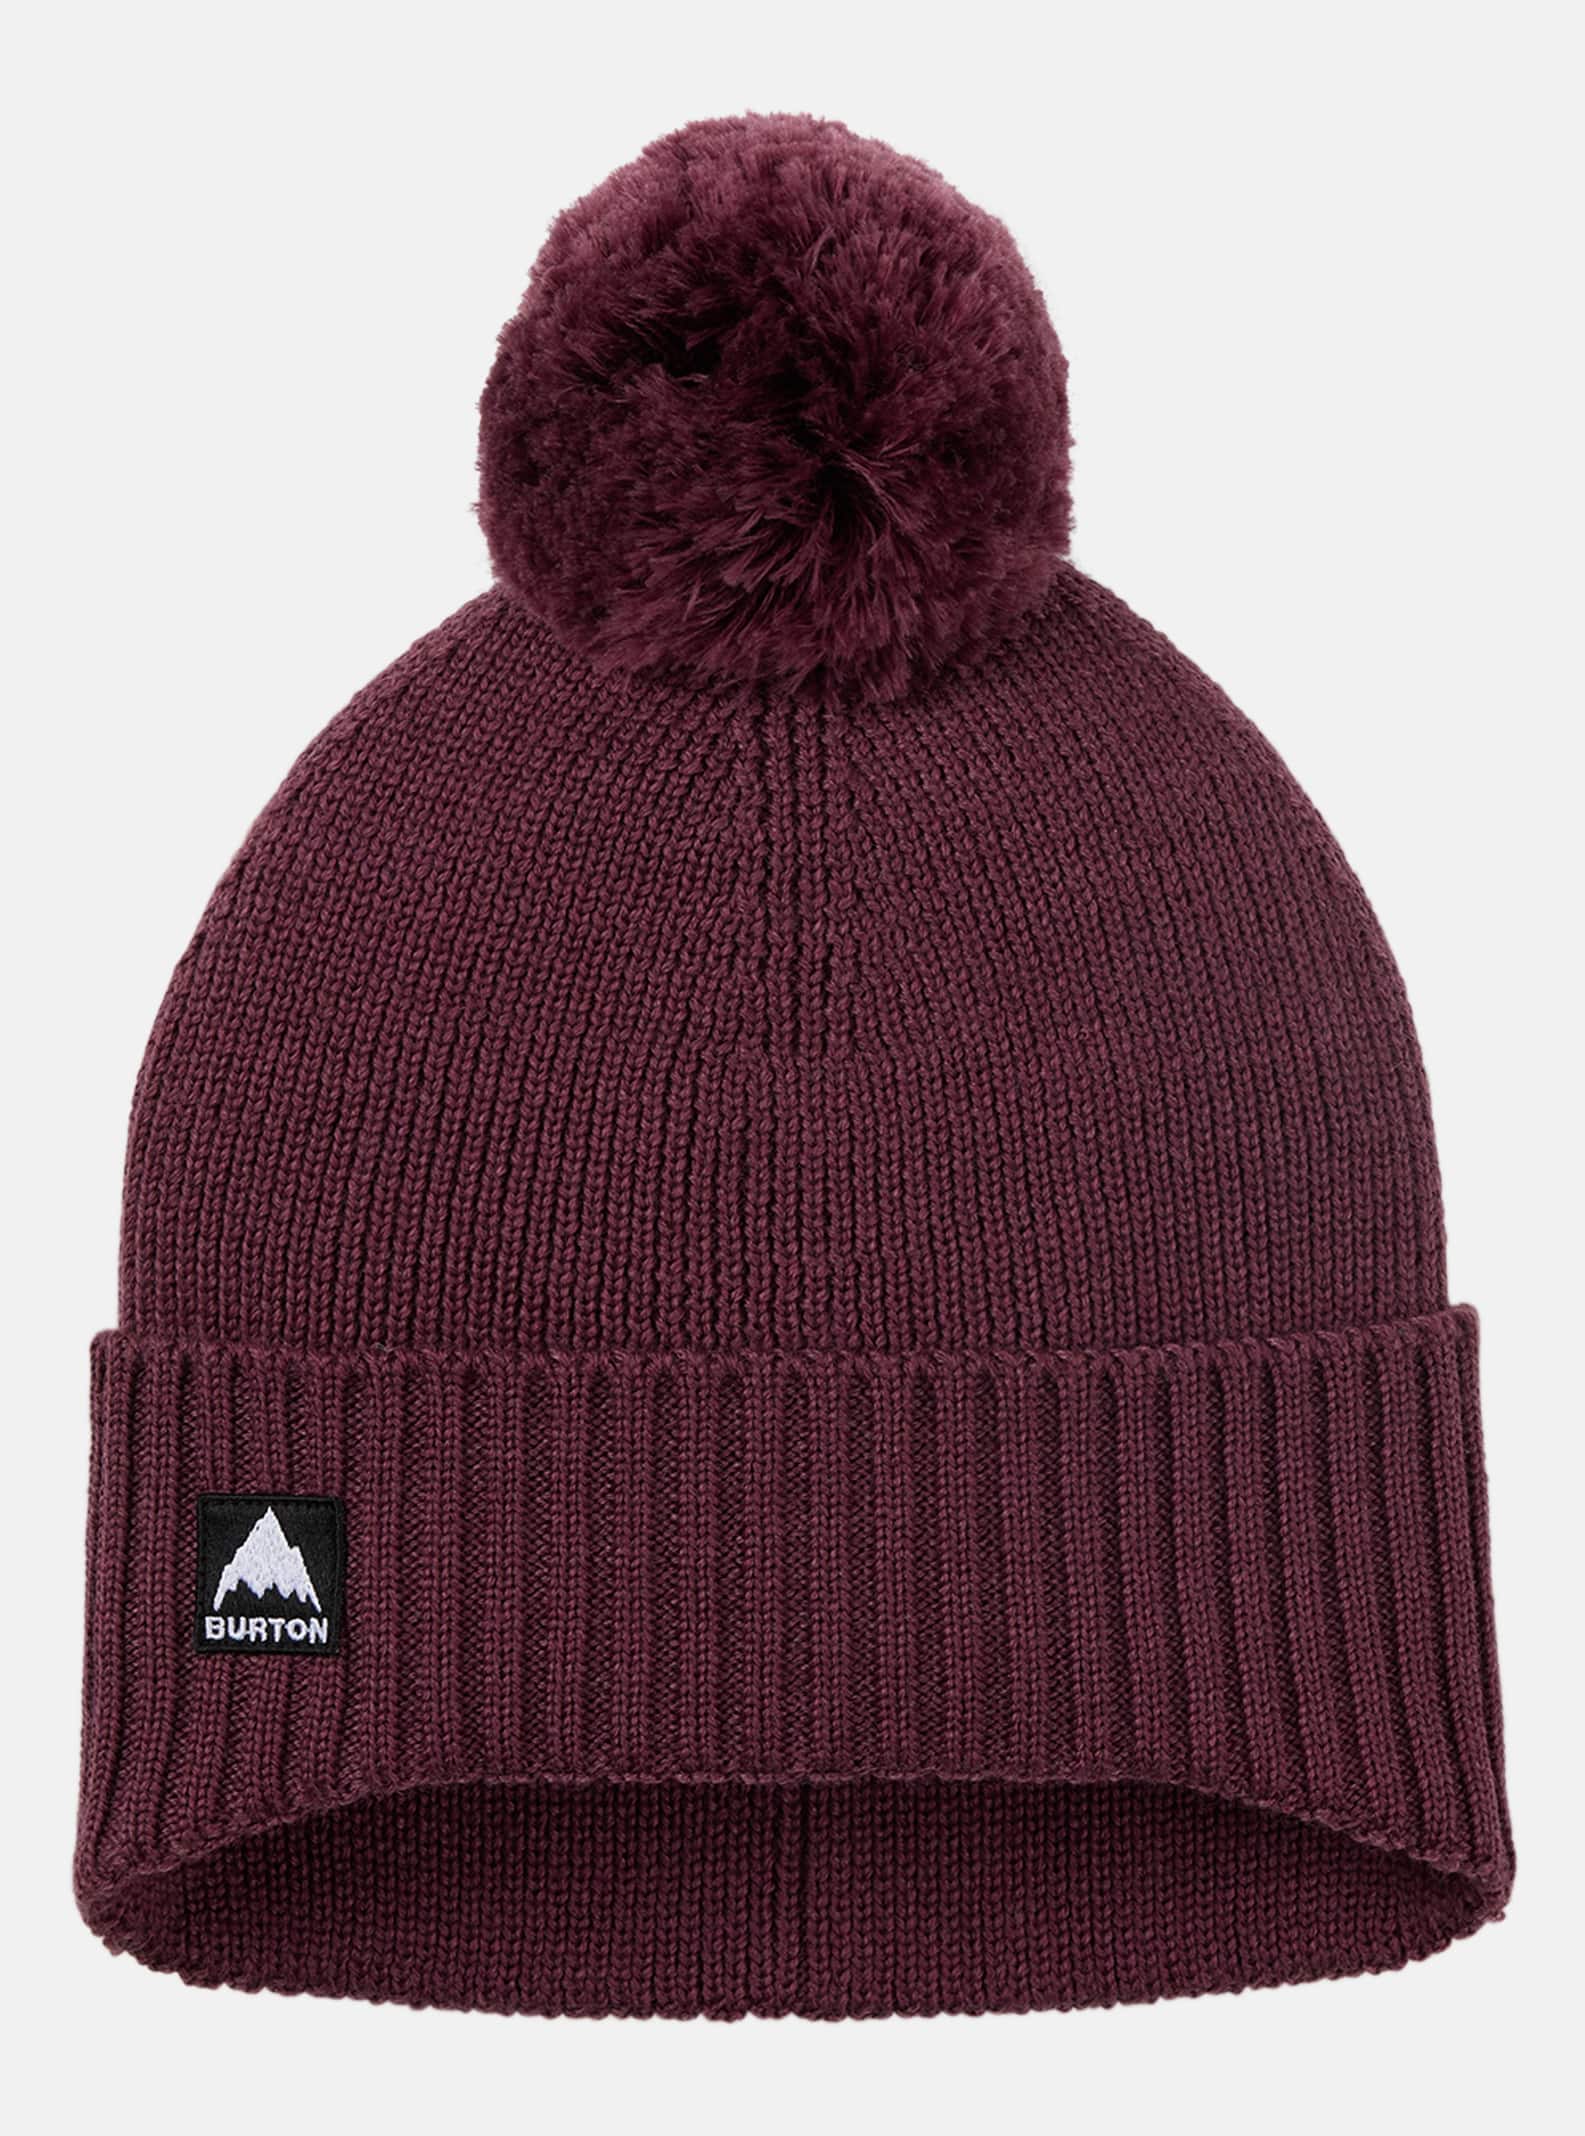 Burton Fleece-Lined Earflap Beanie | Winter Hats & Caps | Burton 